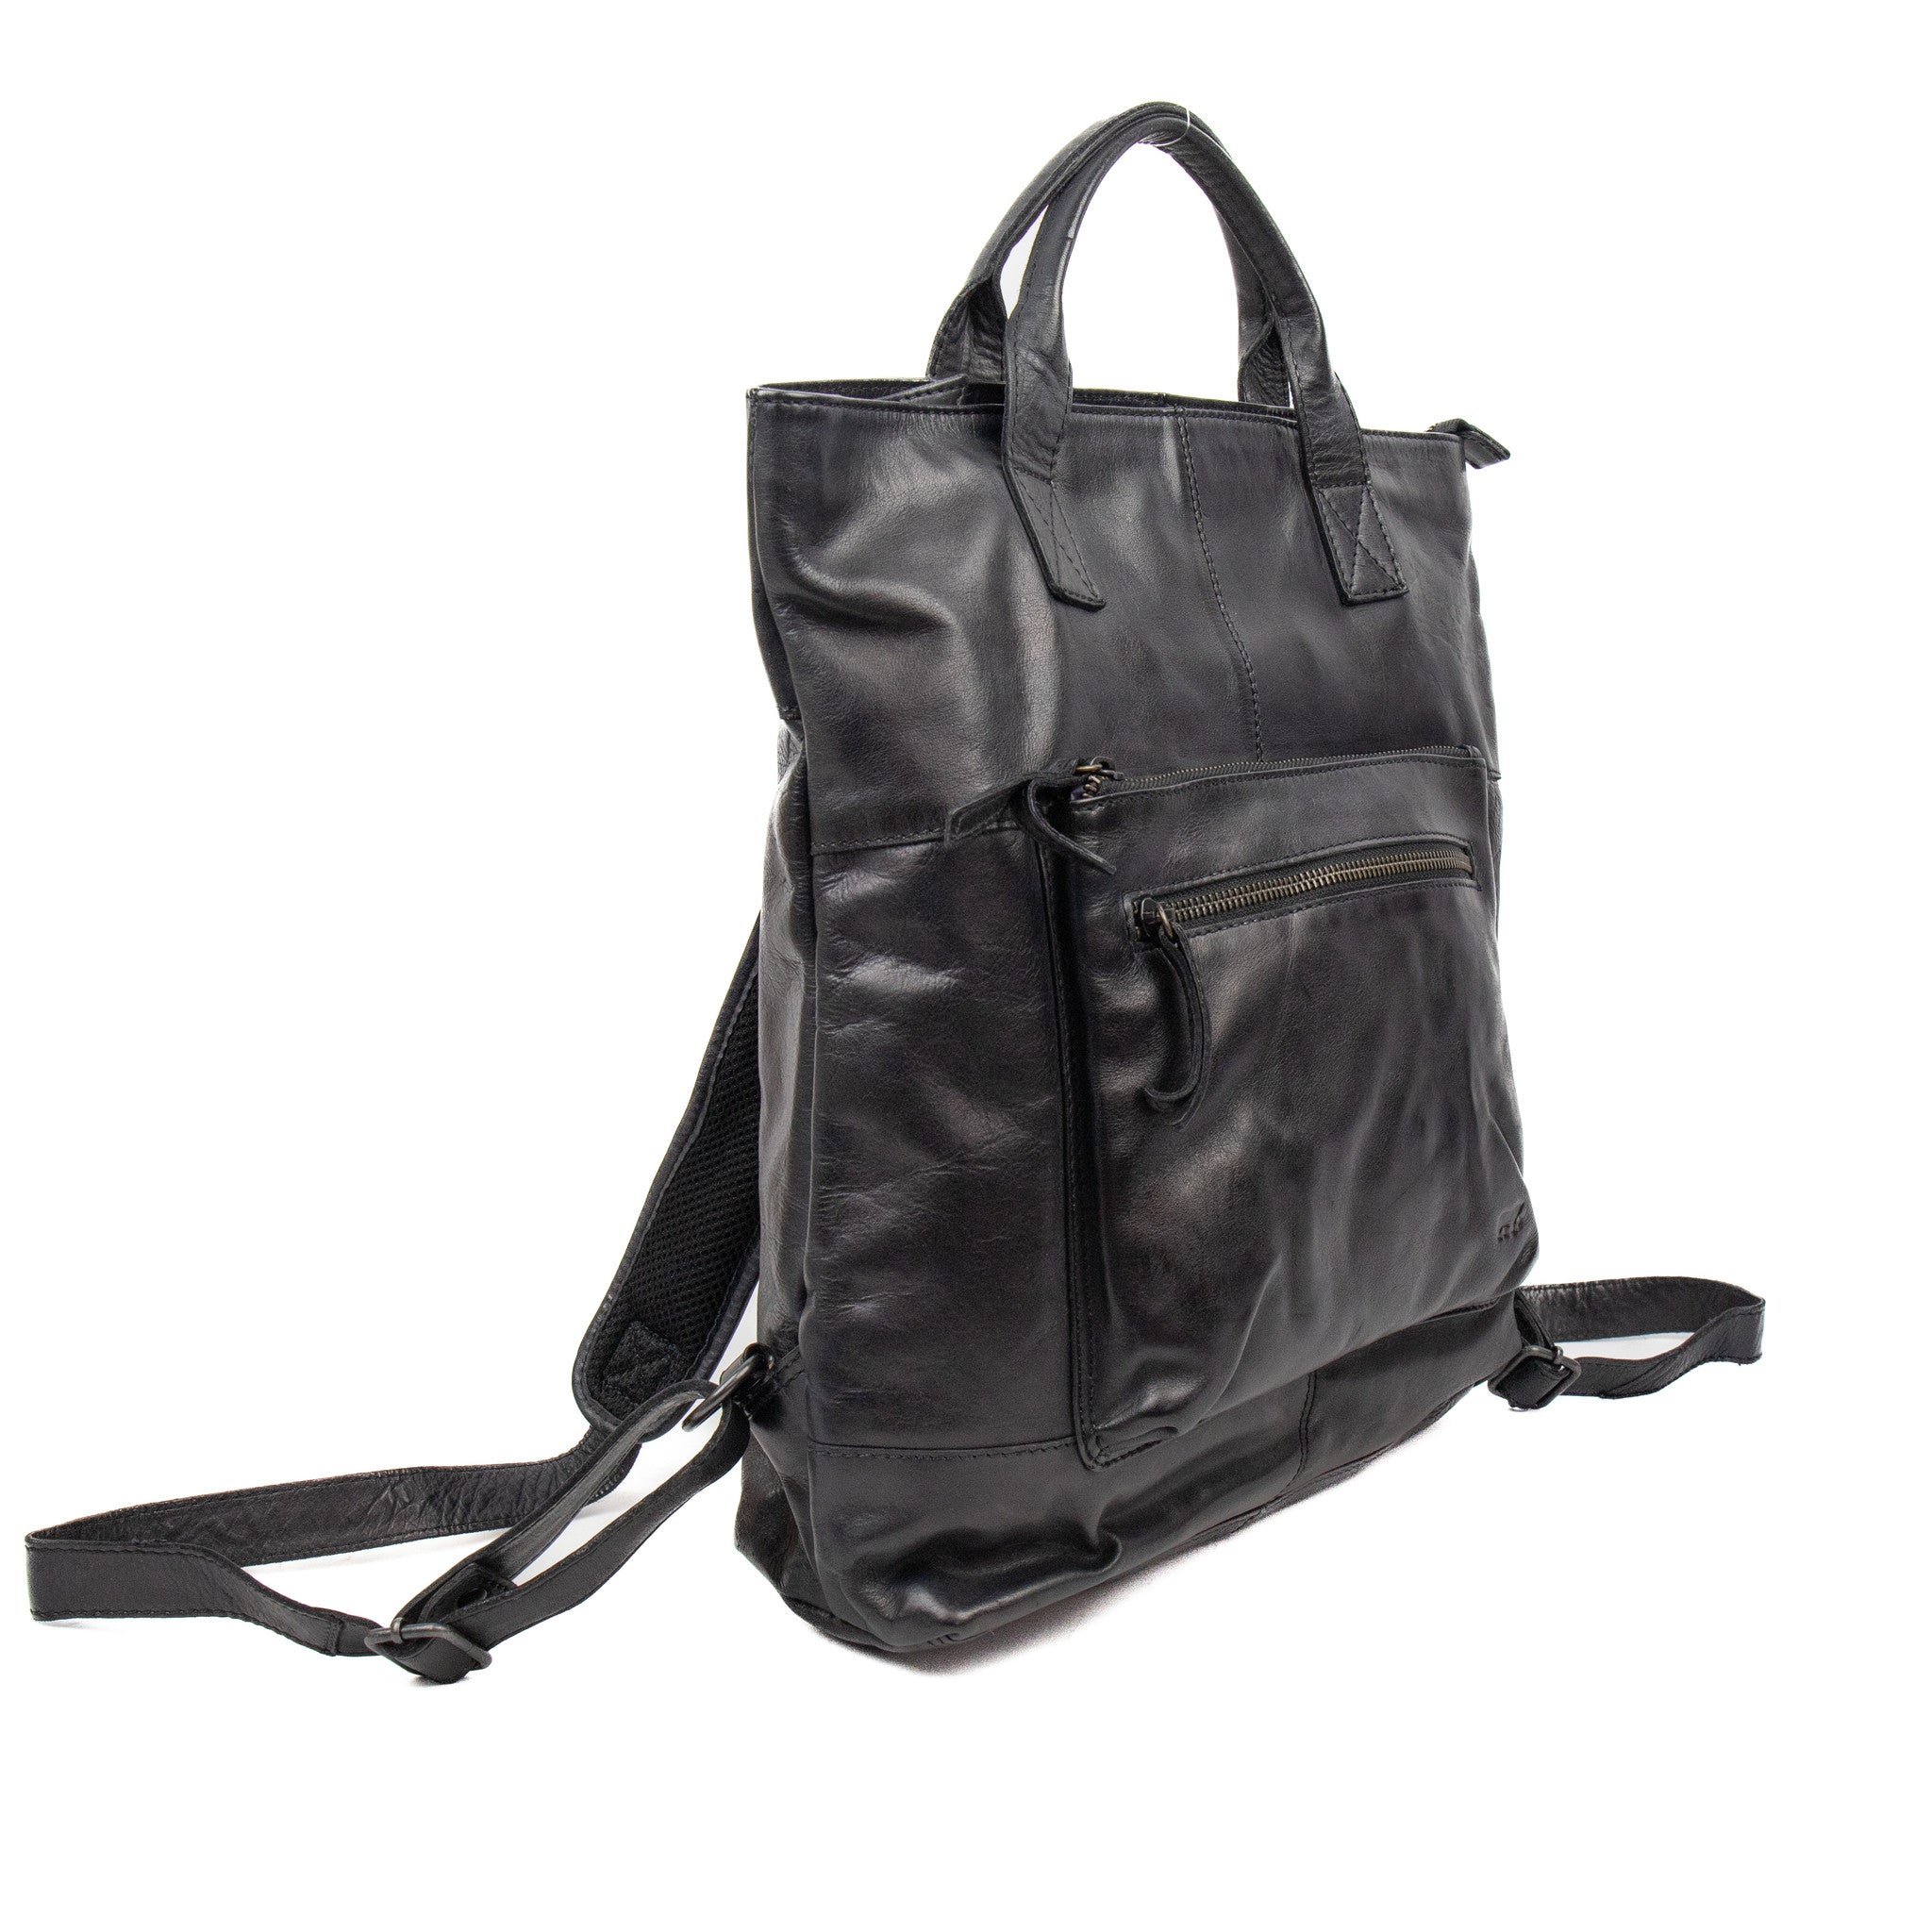 Backpack 'Rinus' black - CL 42605